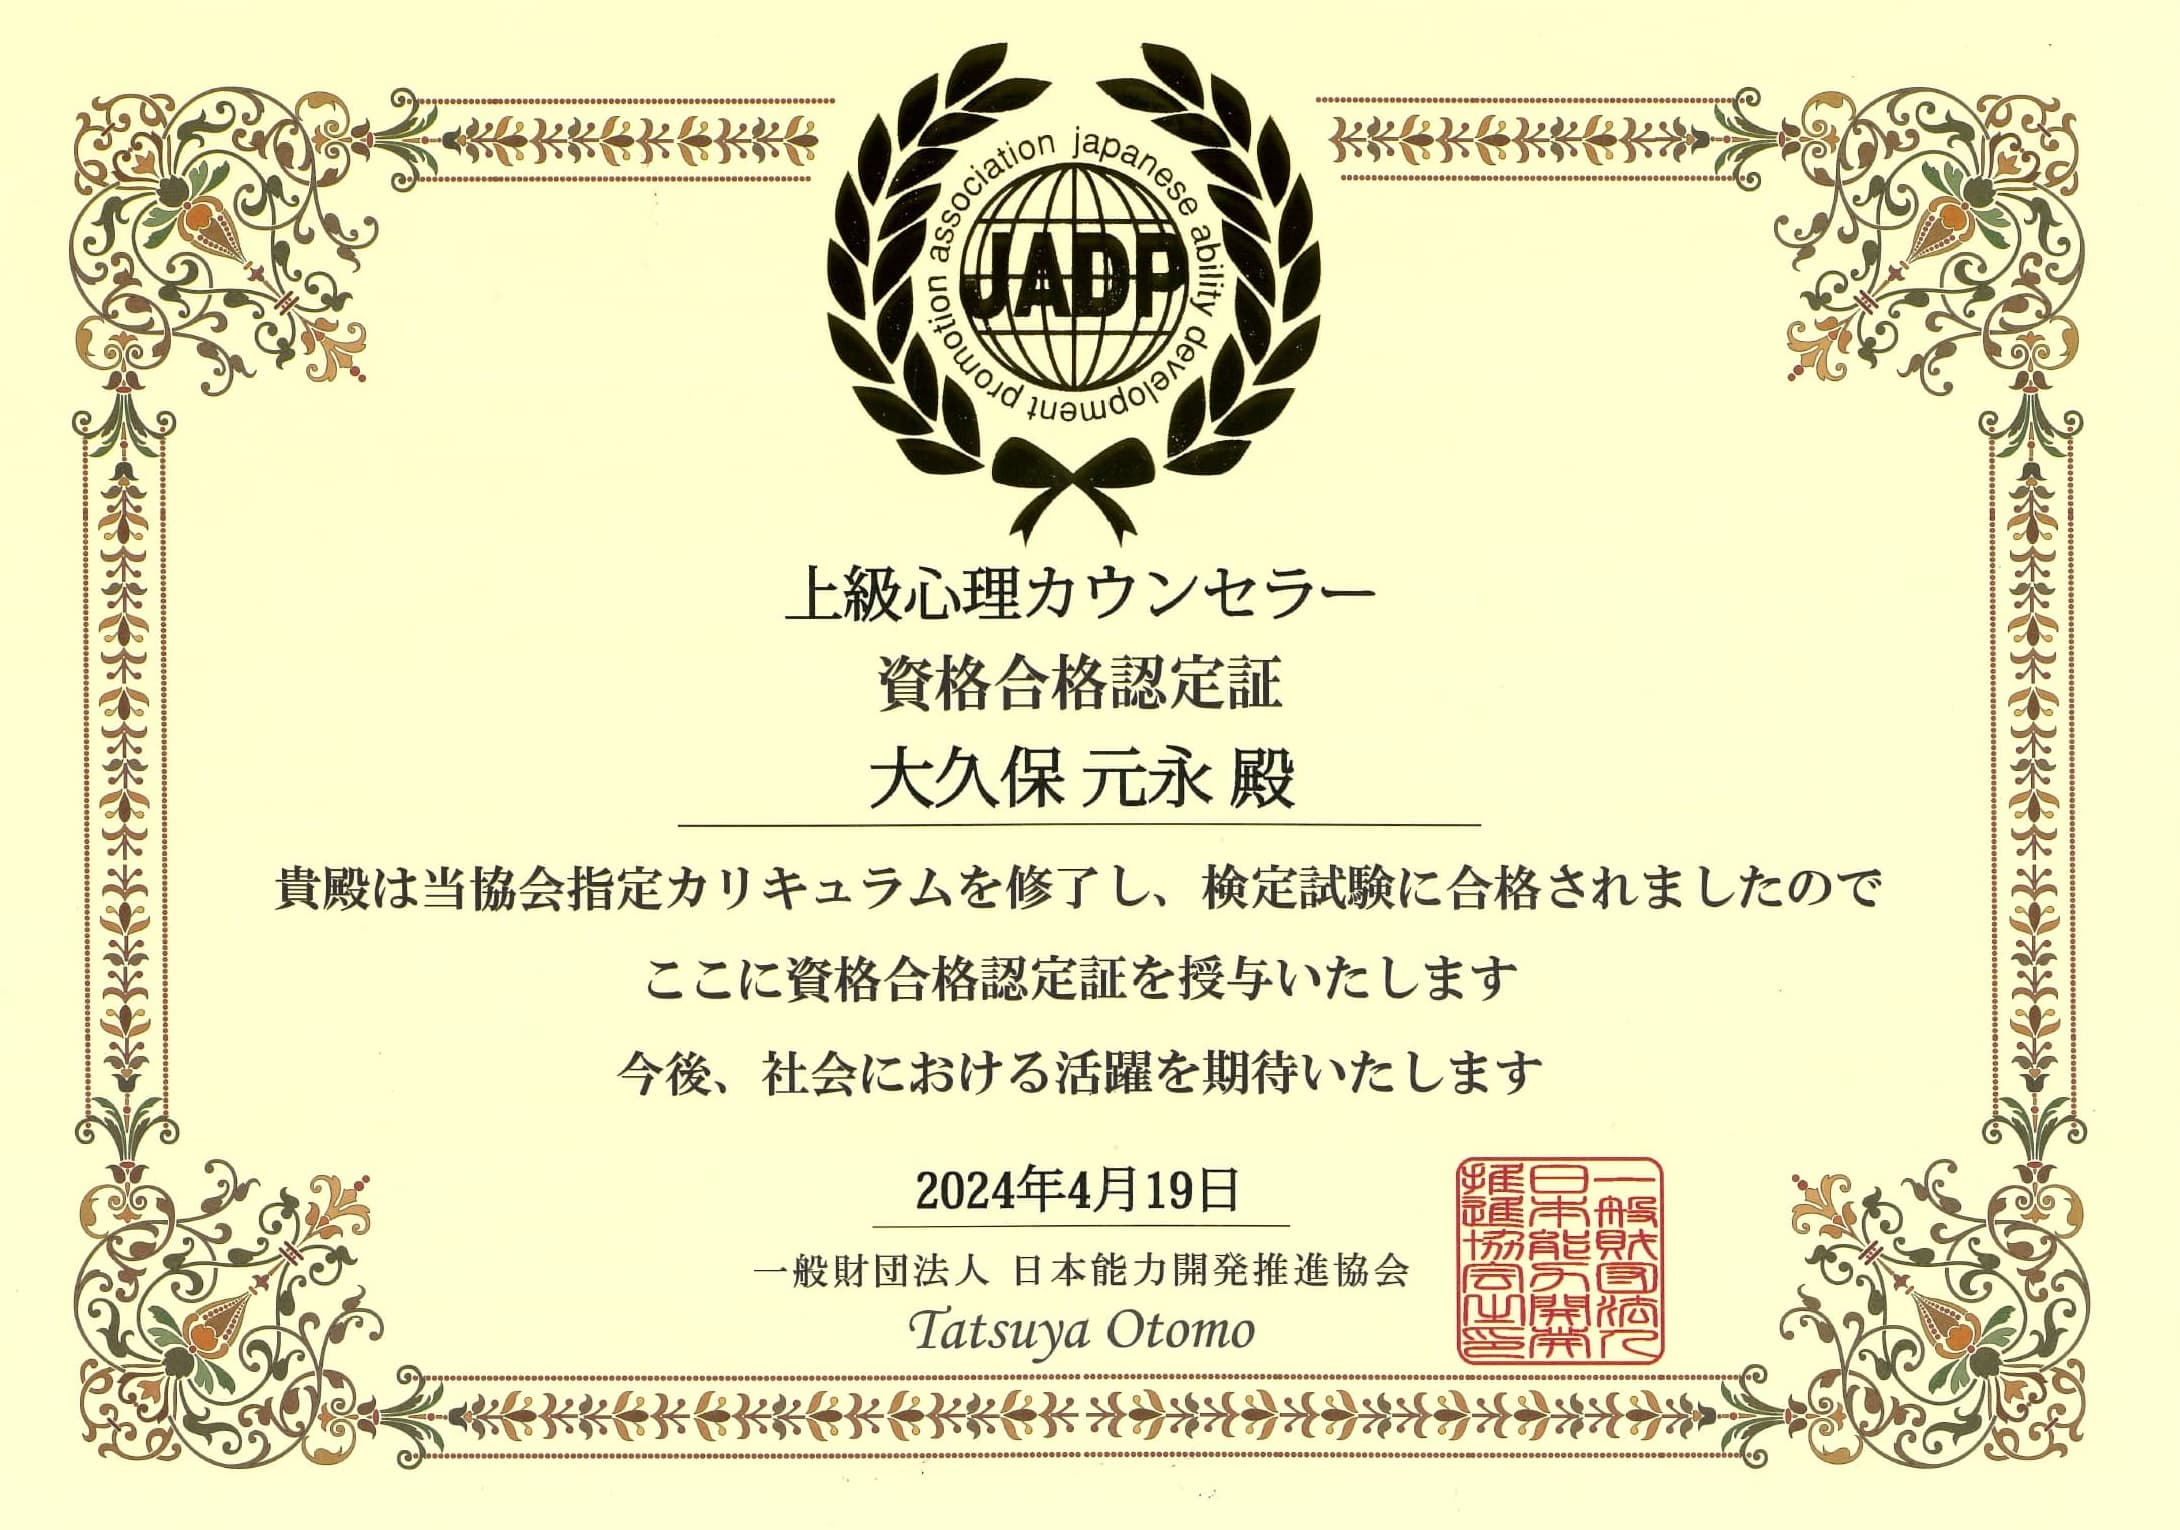 JADP認定上級心理カウンセラー認定証